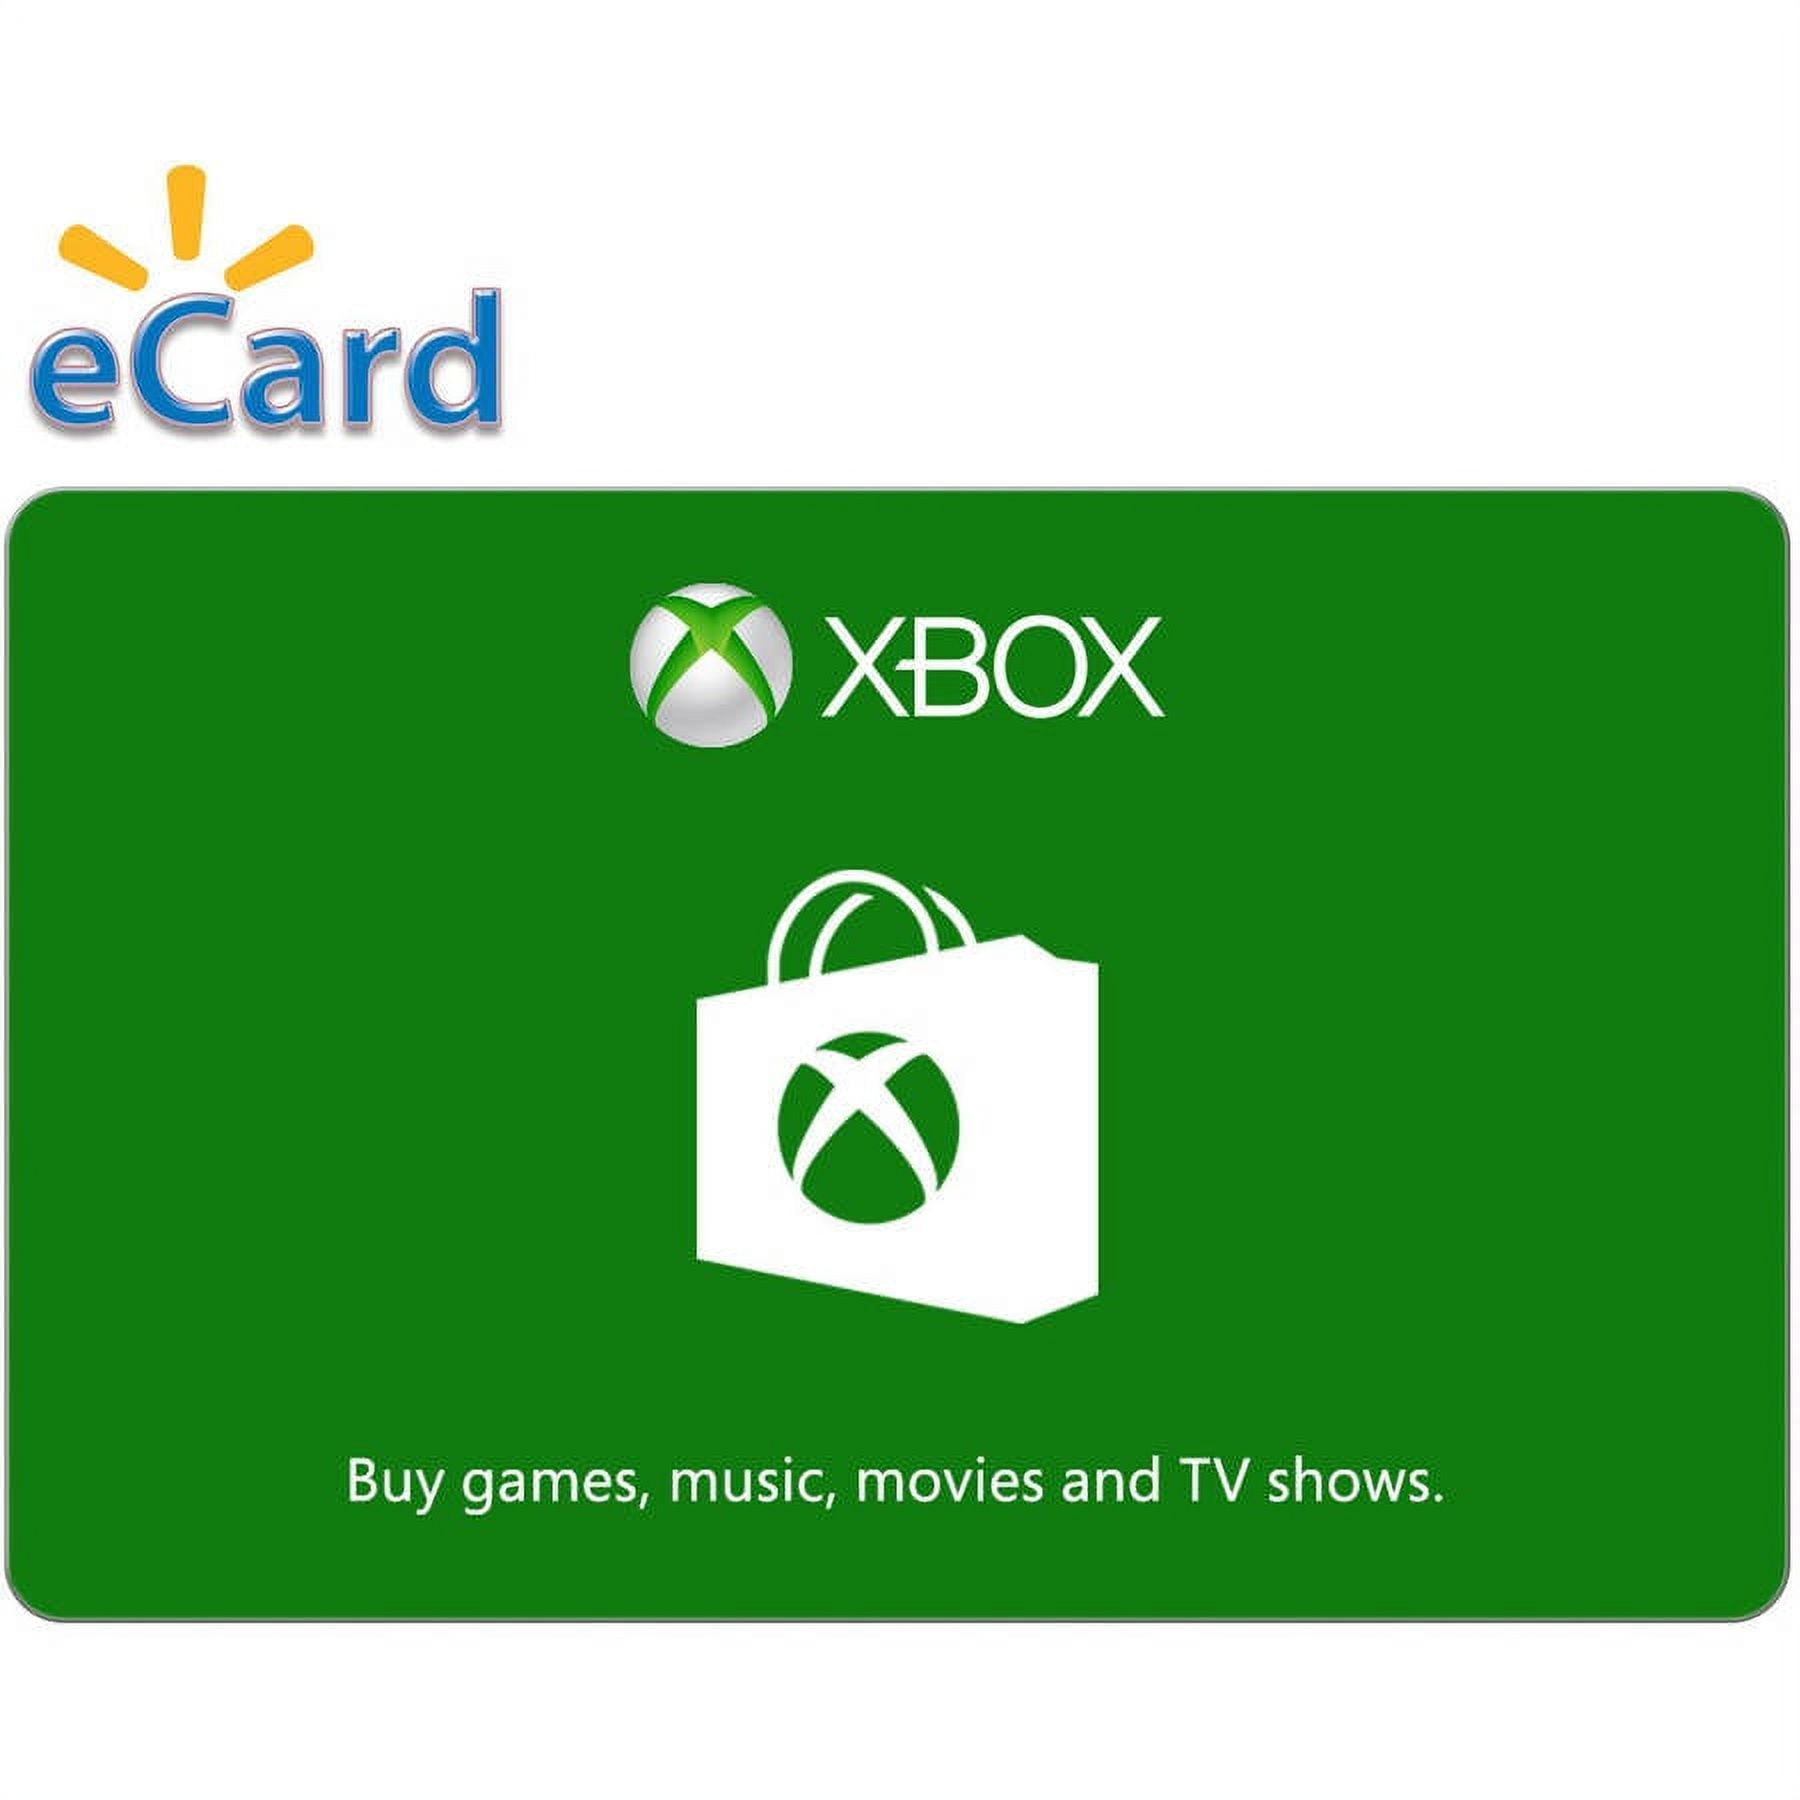 Gift Card Microsoft Xbox 25 reais - Envio Imediato - Gift Card Online